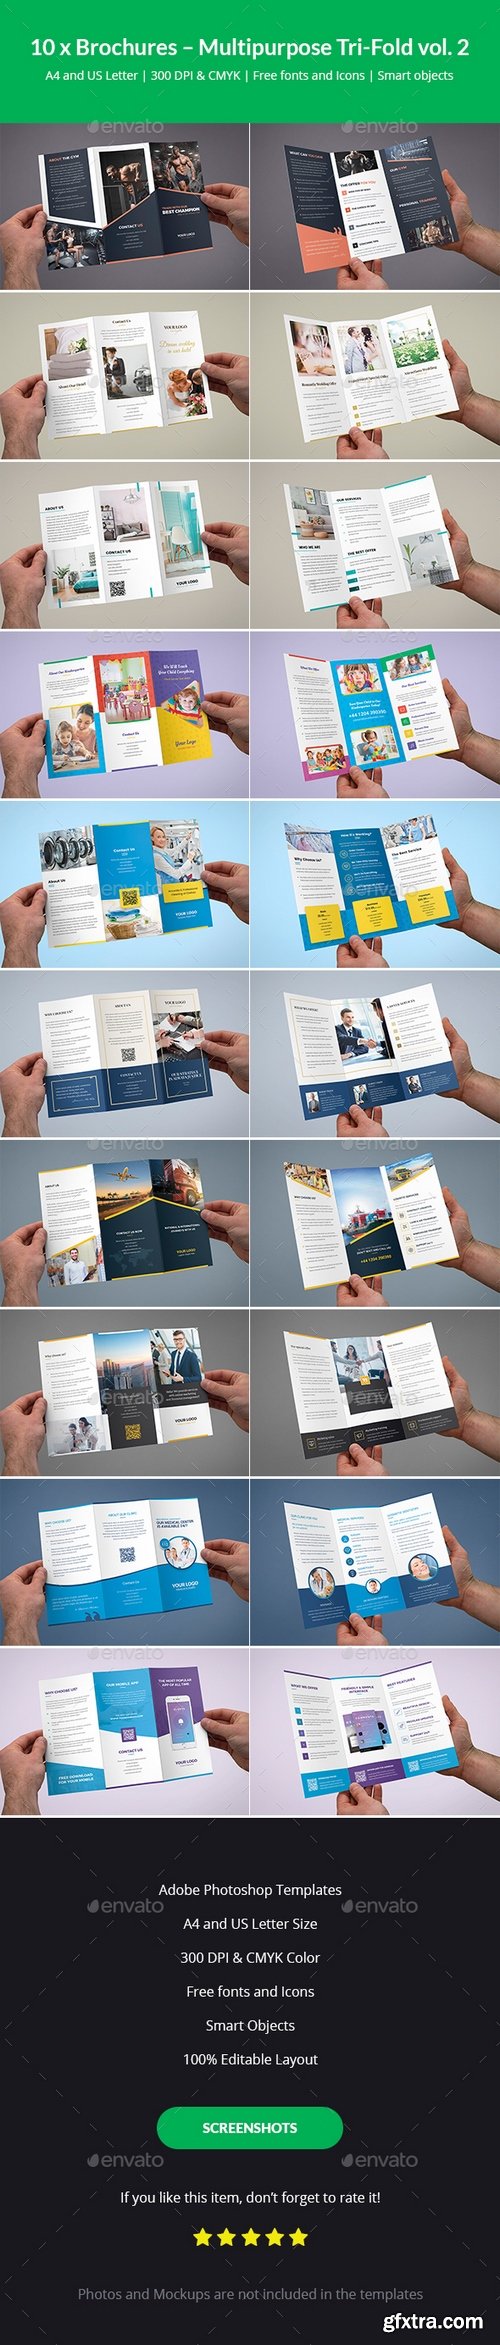 Graphicriver - Brochures – Multipurpose Tri-Fold Bundle vol. 2 20208625